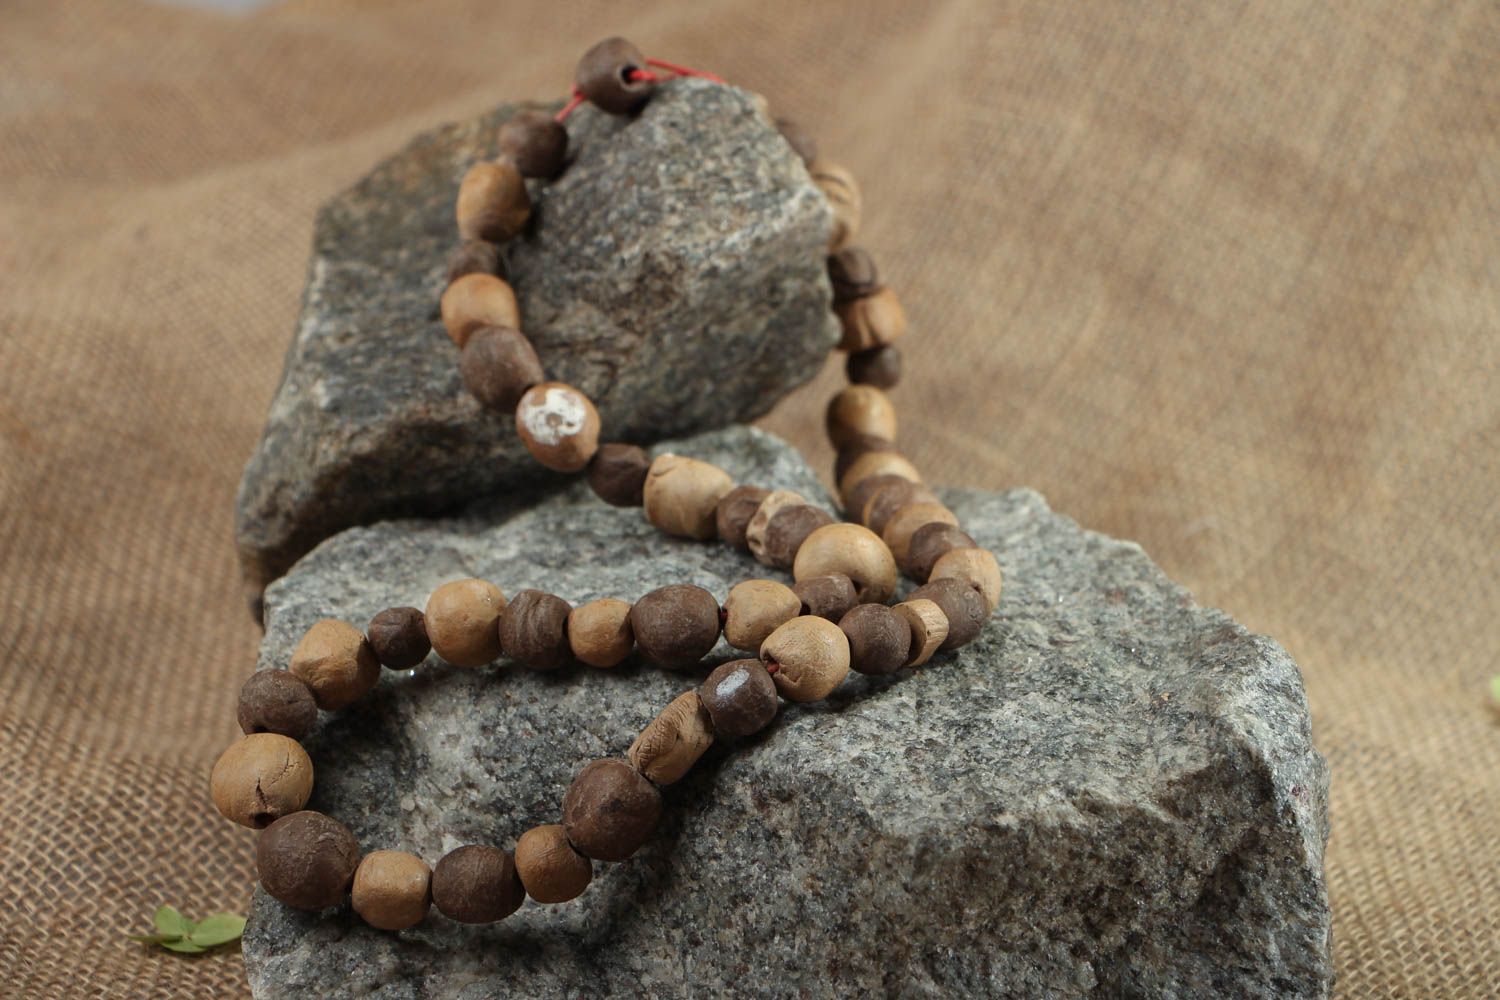 Ceramic bead necklace in ethnic style photo 5